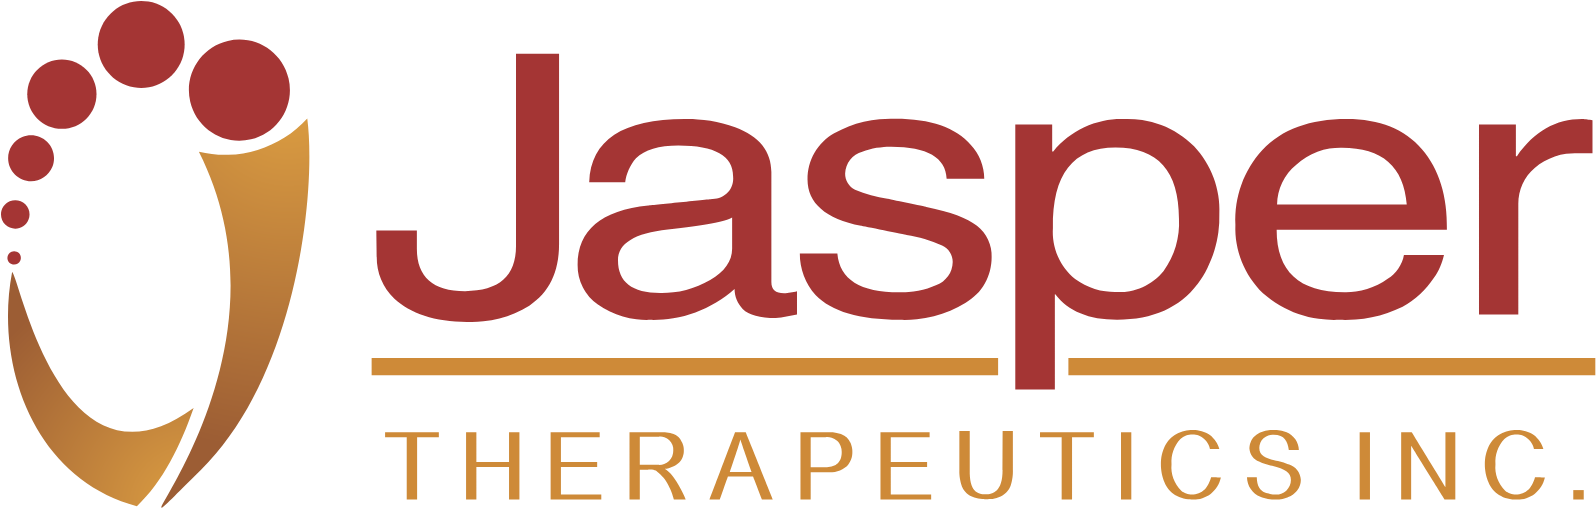 Jasper Therapeutics logo large (transparent PNG)